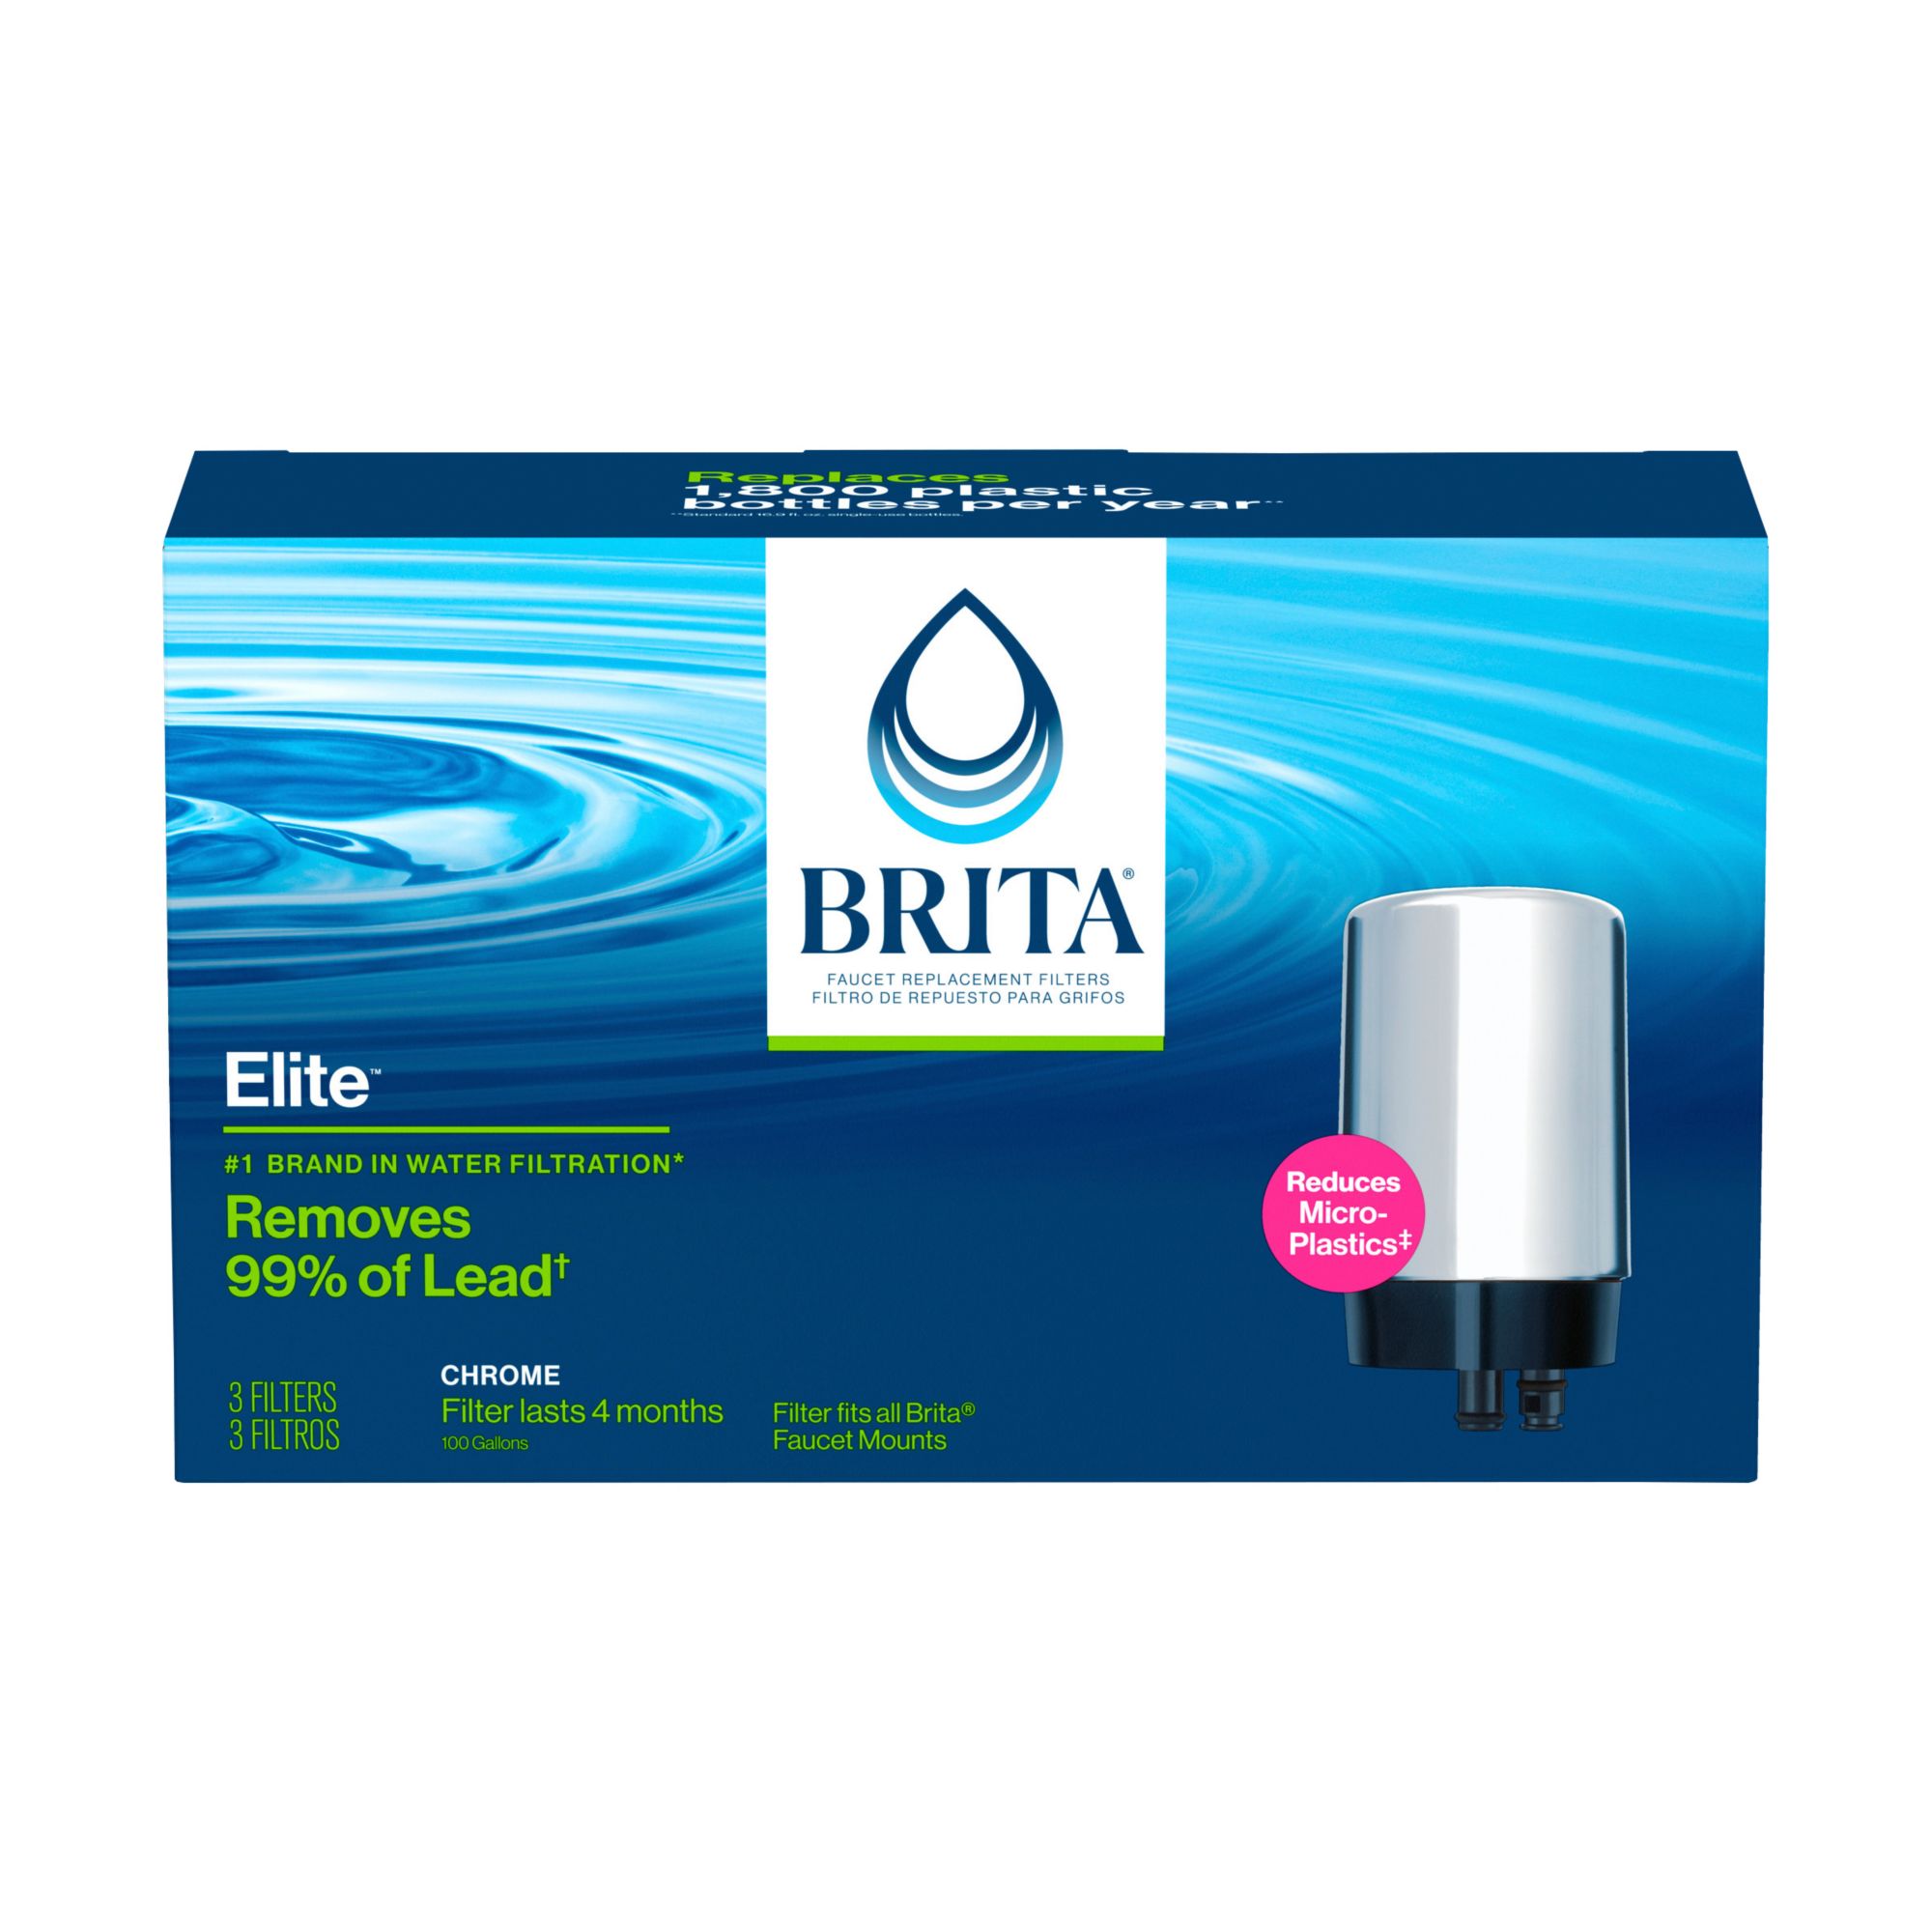 Brita Faucet Mount System Replacement Filter